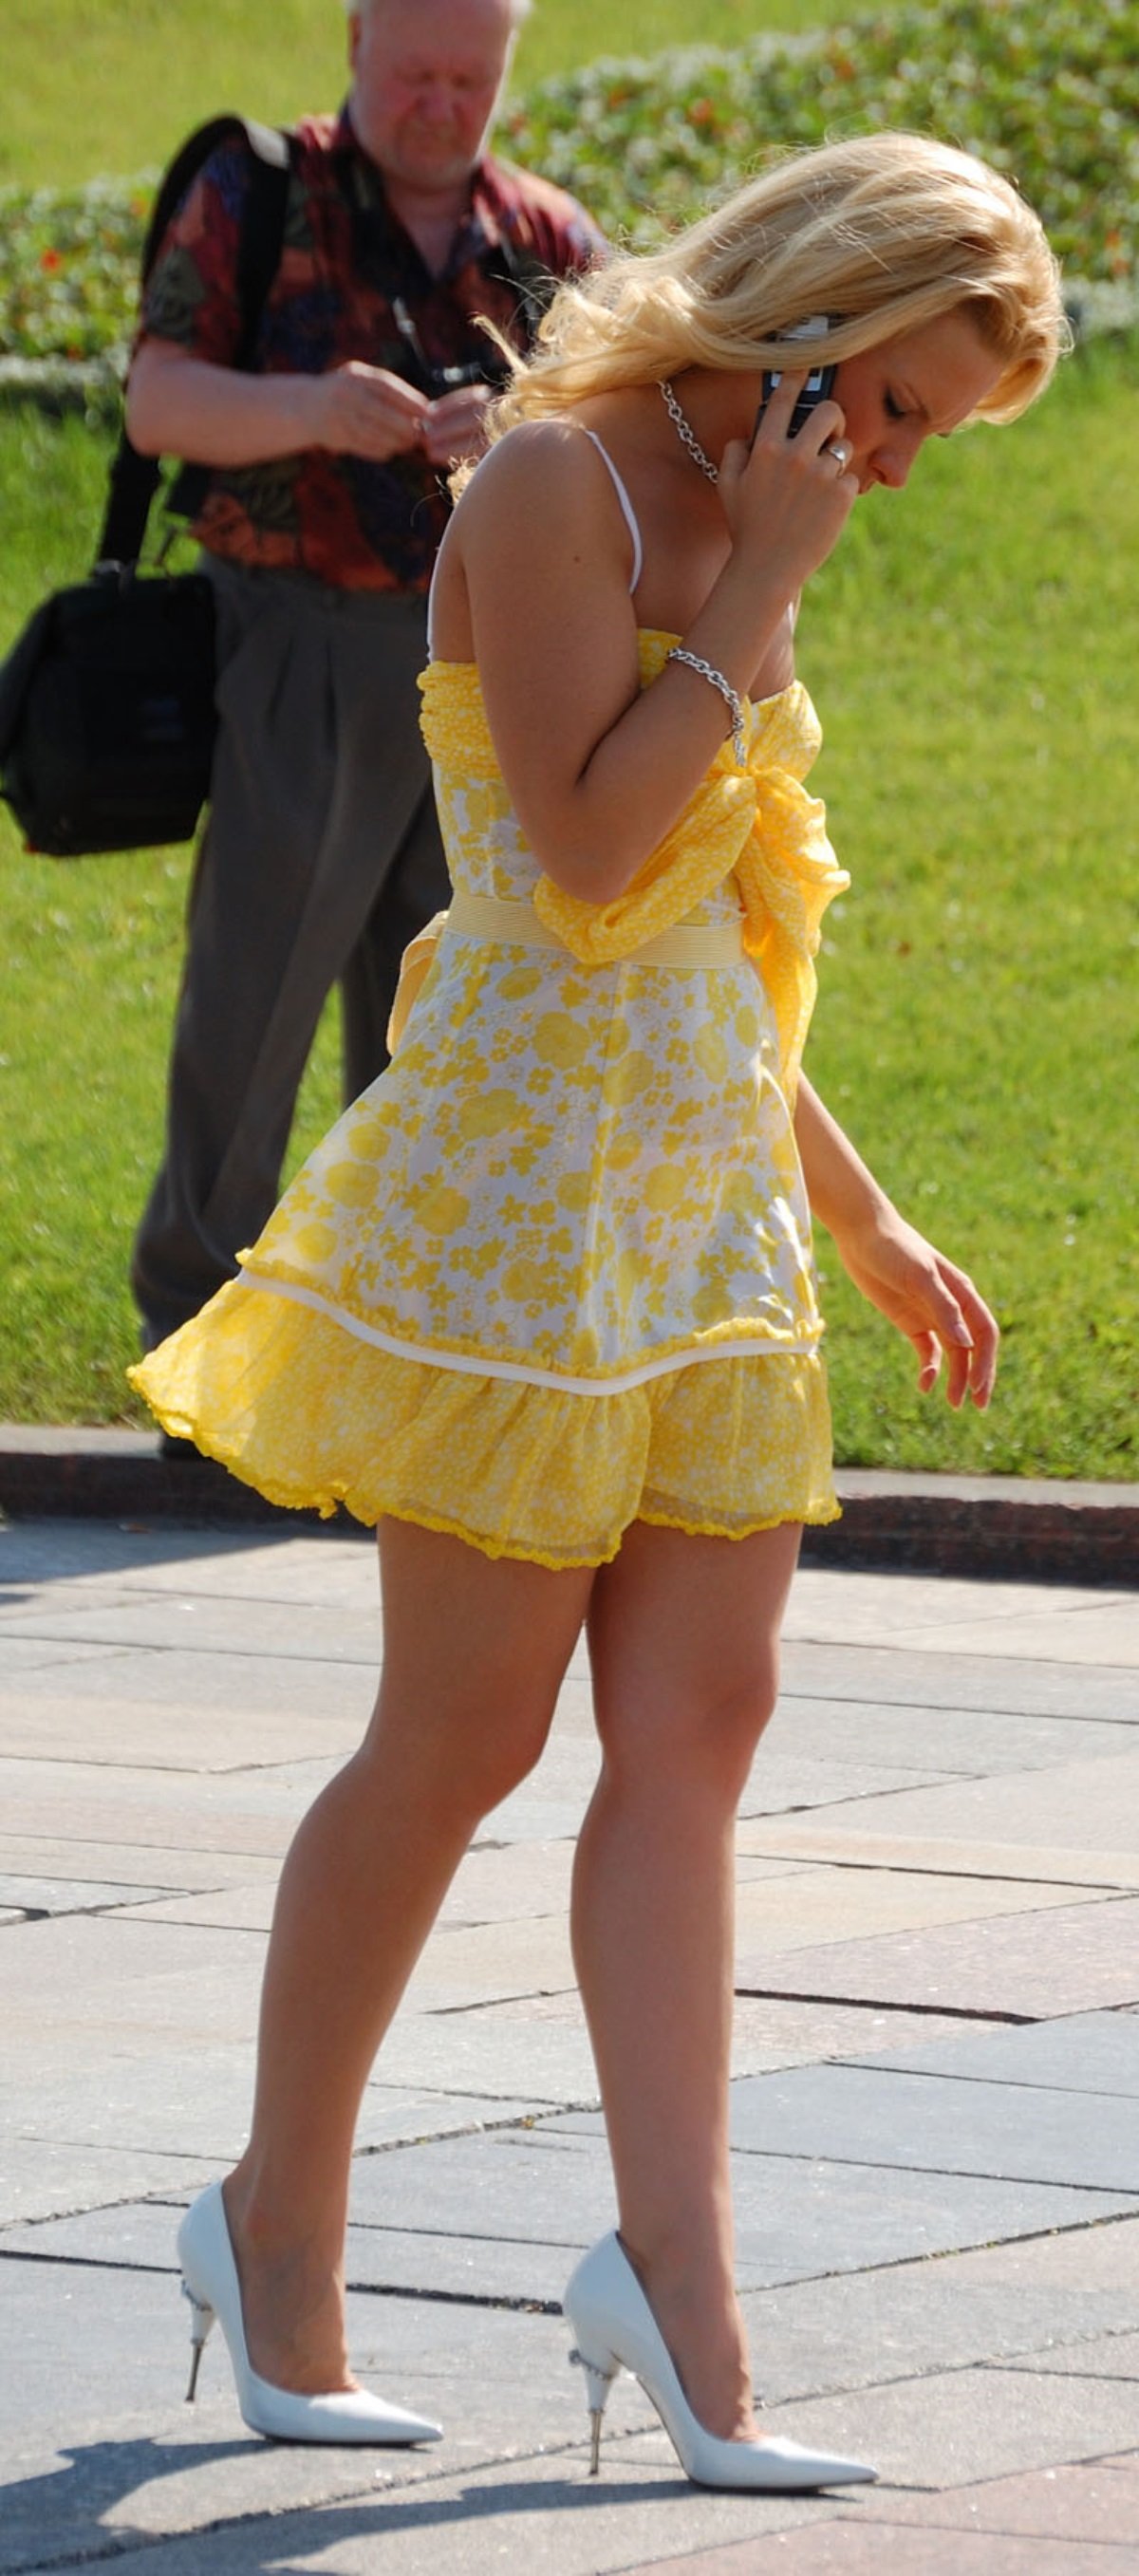 Фото девушки задирающей желтый сарафан на лестнице